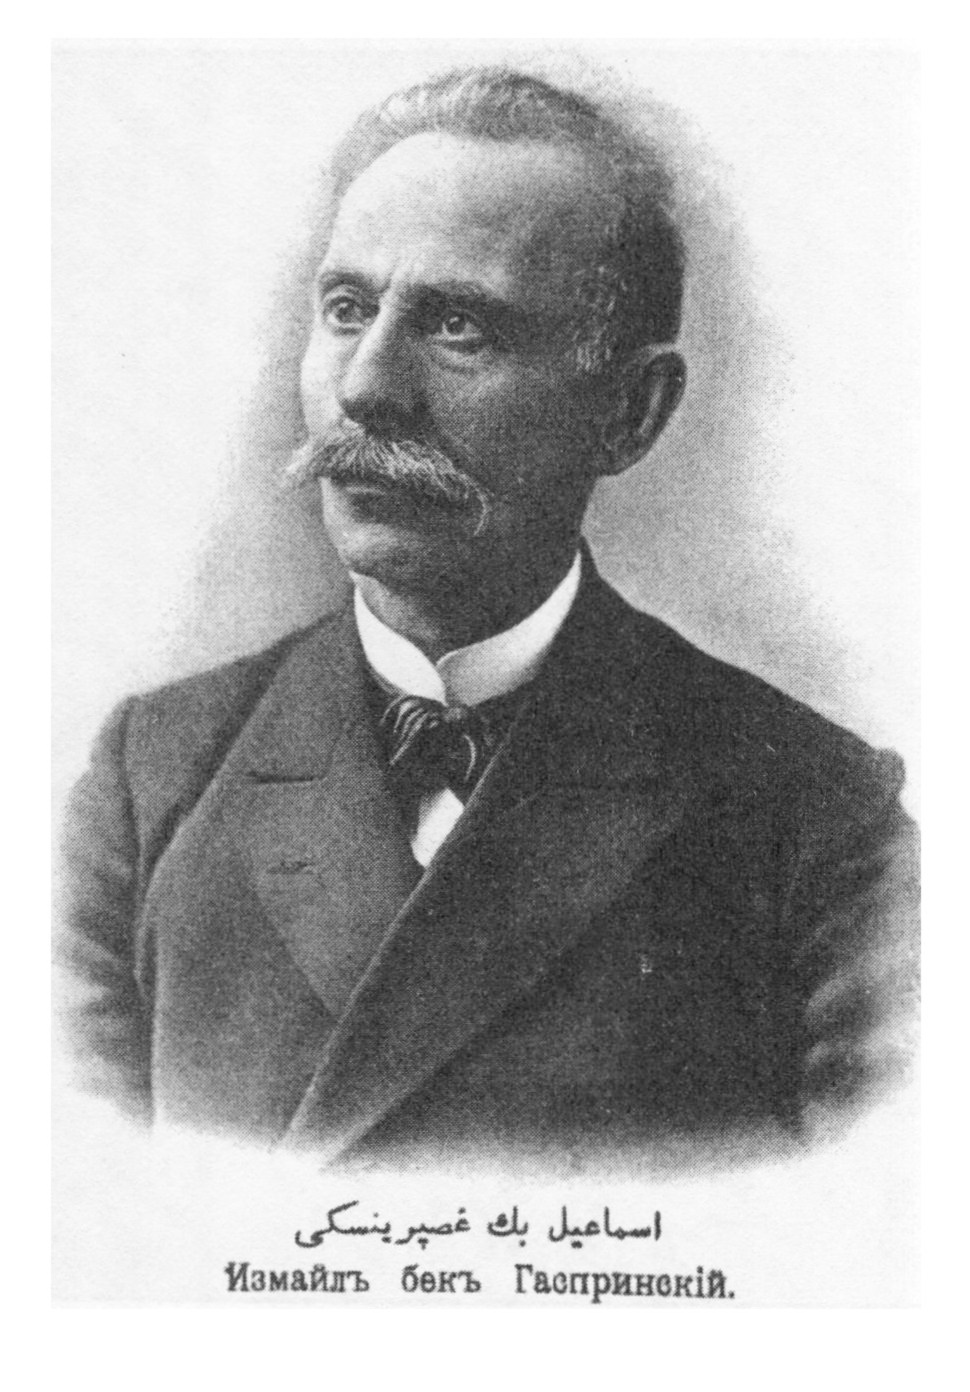 Ismail Bey Gaspirali, ou Ismail Gasprinsky (1851-1914), jadidista 